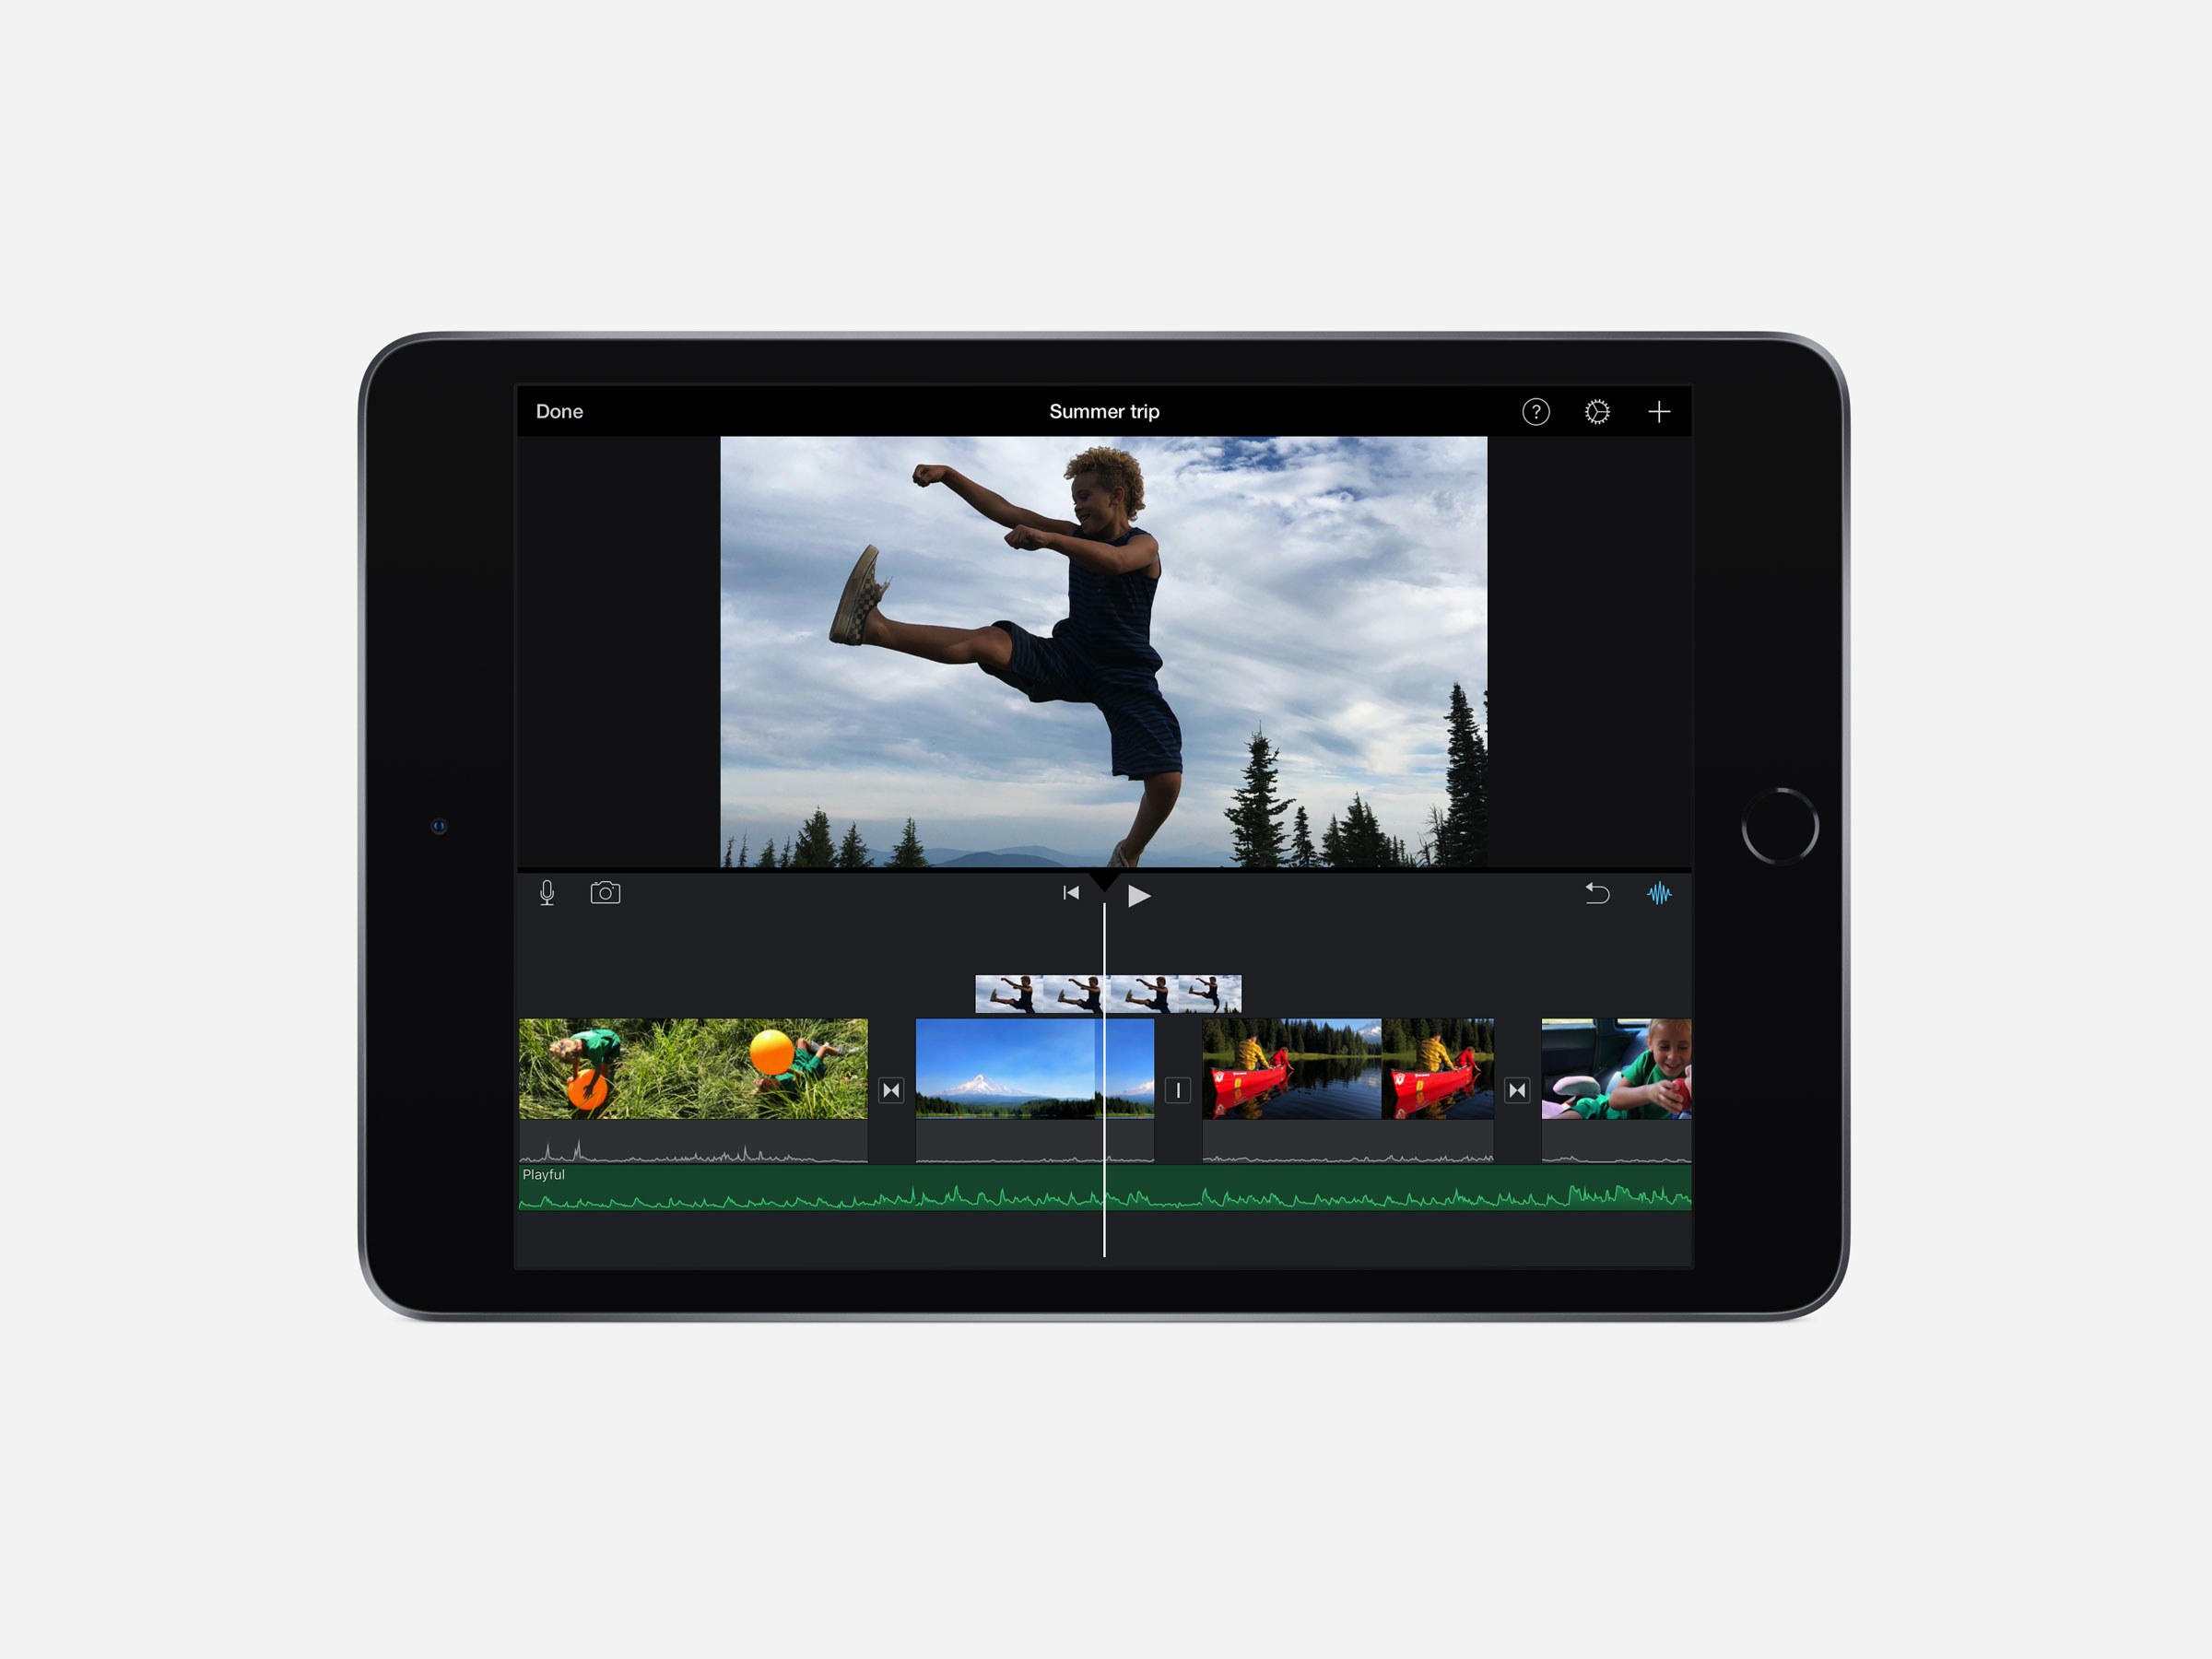 Apple iPad 2019 specs features